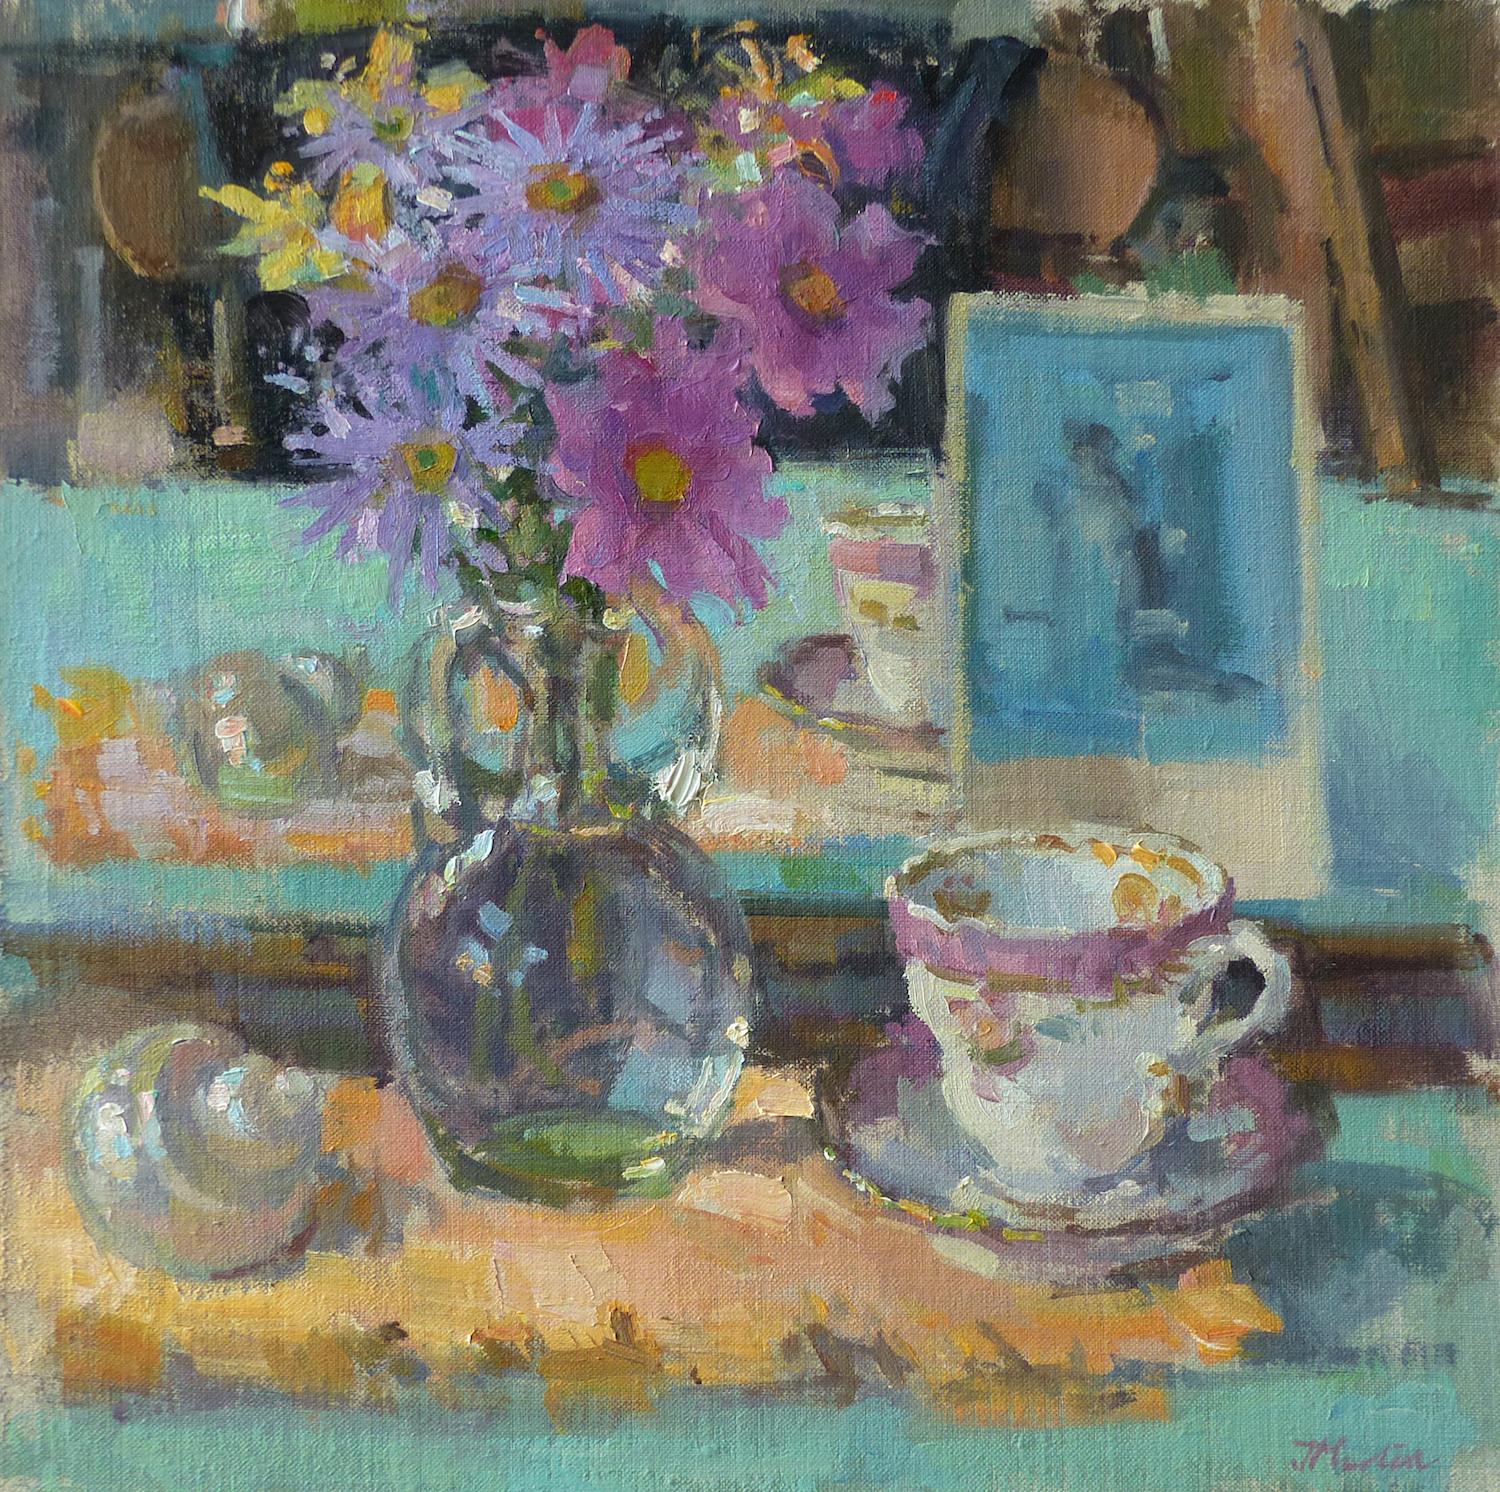 John D Martin RBA Interior Painting - Autumn Flowers - impressionist still life artwork oil painting modern flowers